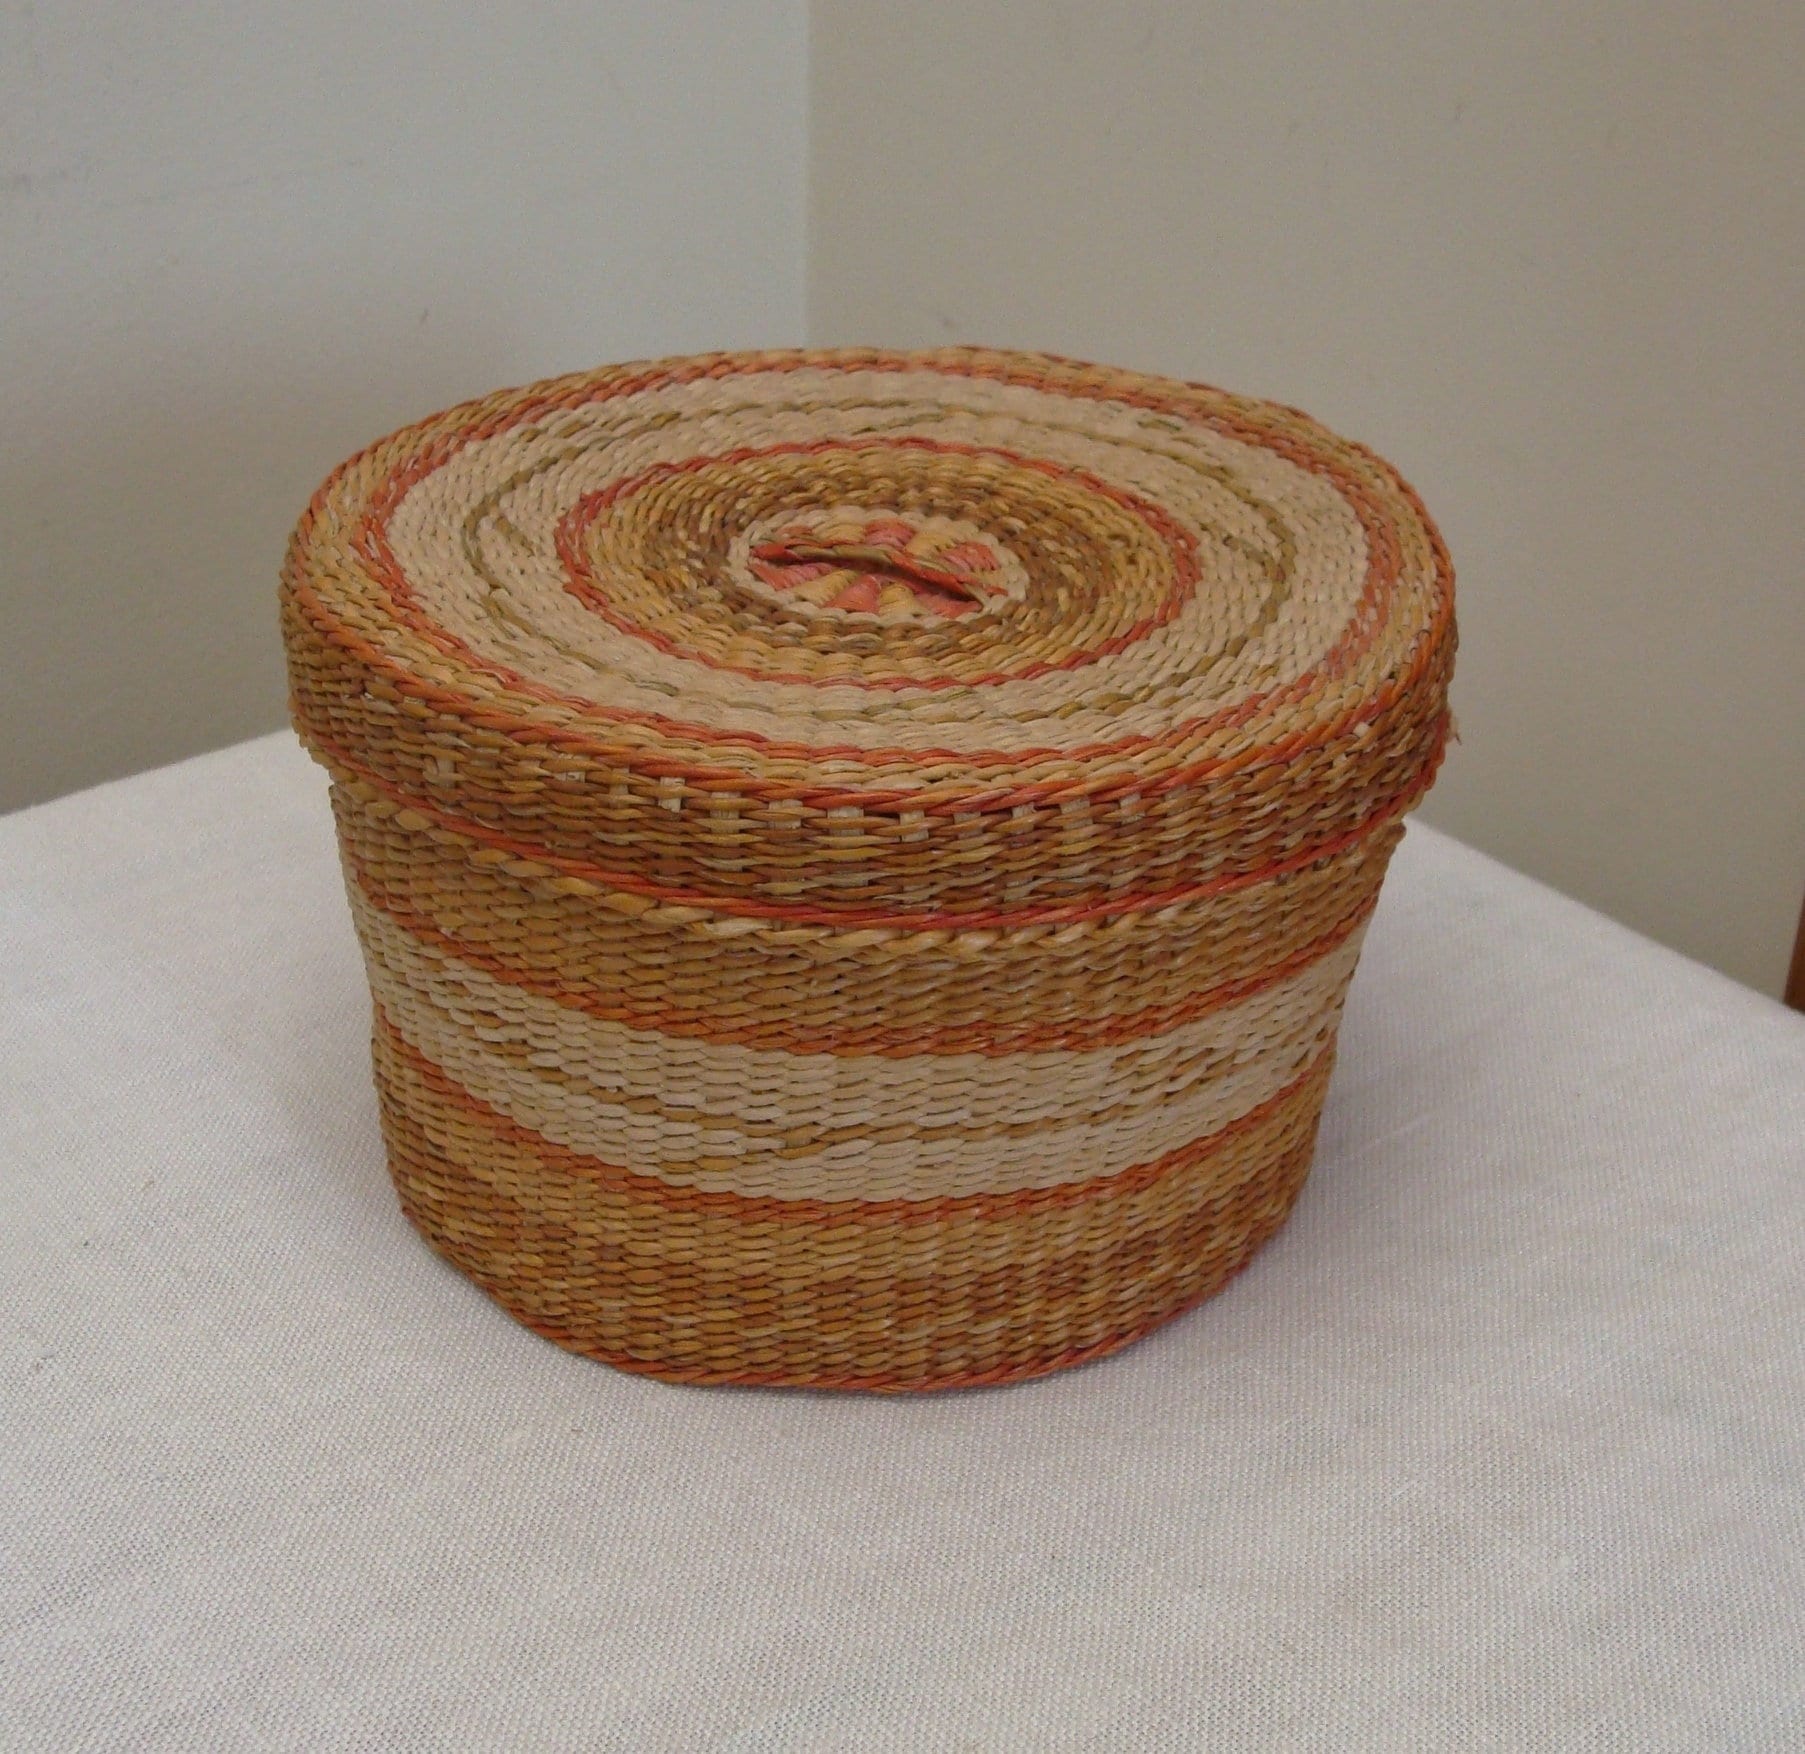 Sweetgrass Flat Lidded Basket